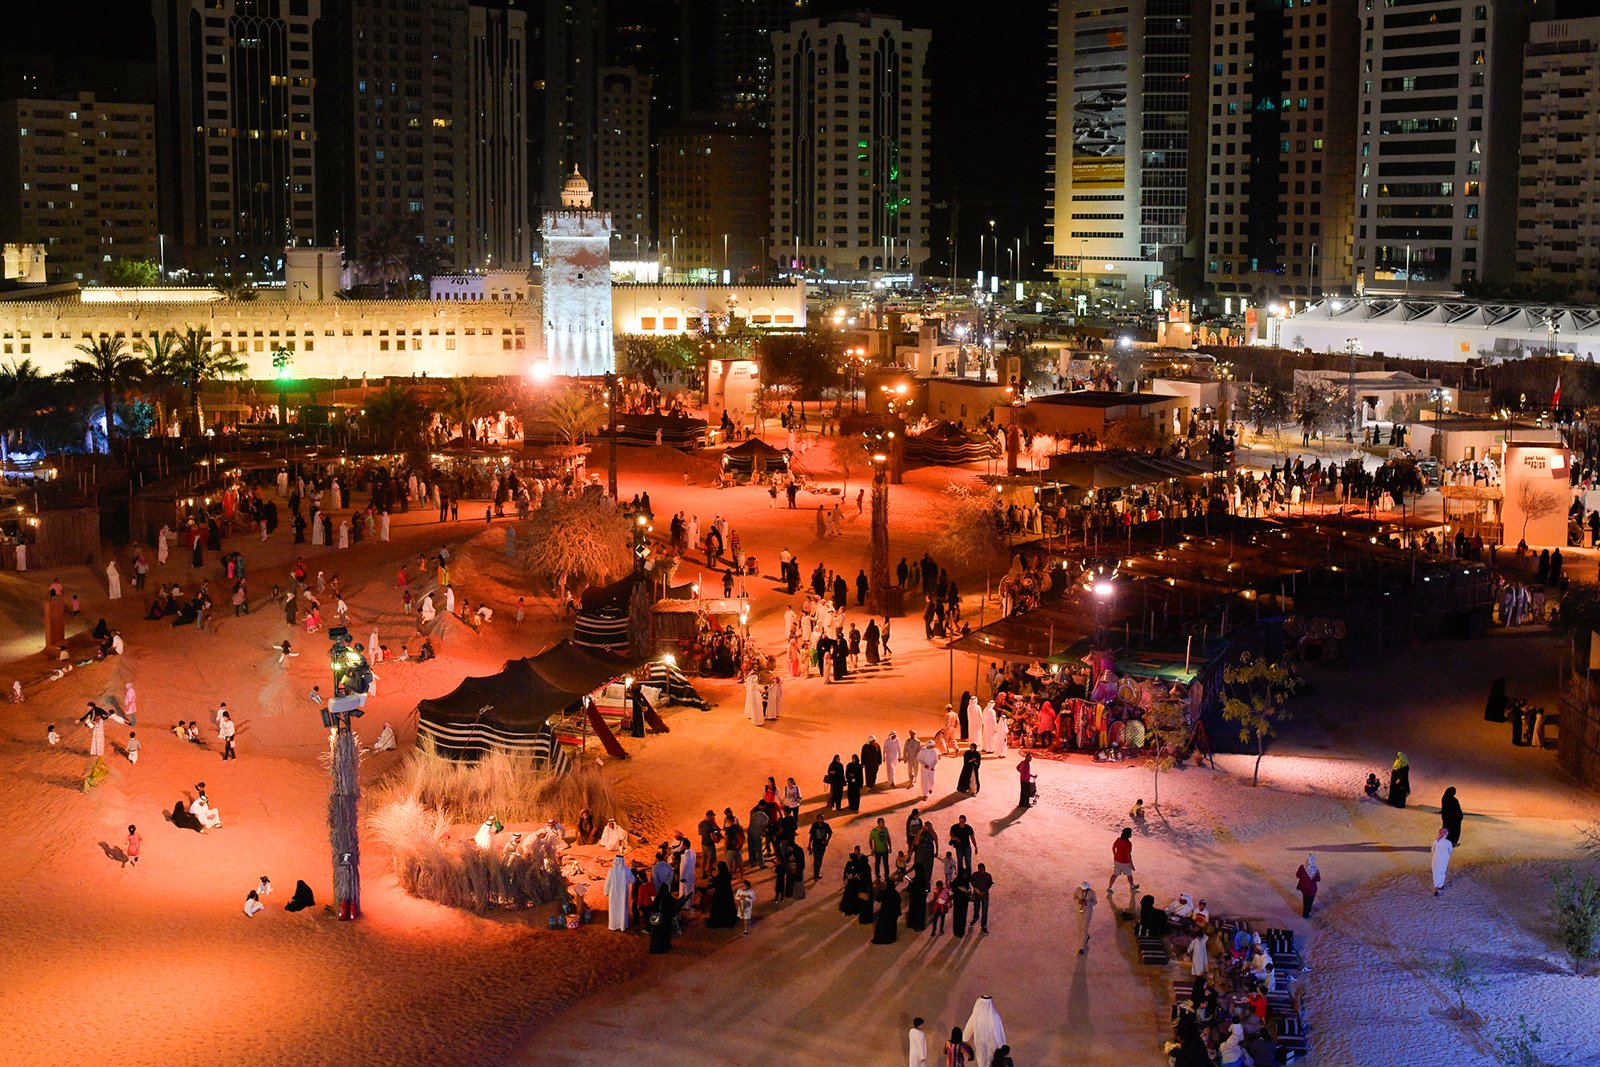 How to go to the Qasr Al-Hosn Festival in Abu Dhabi